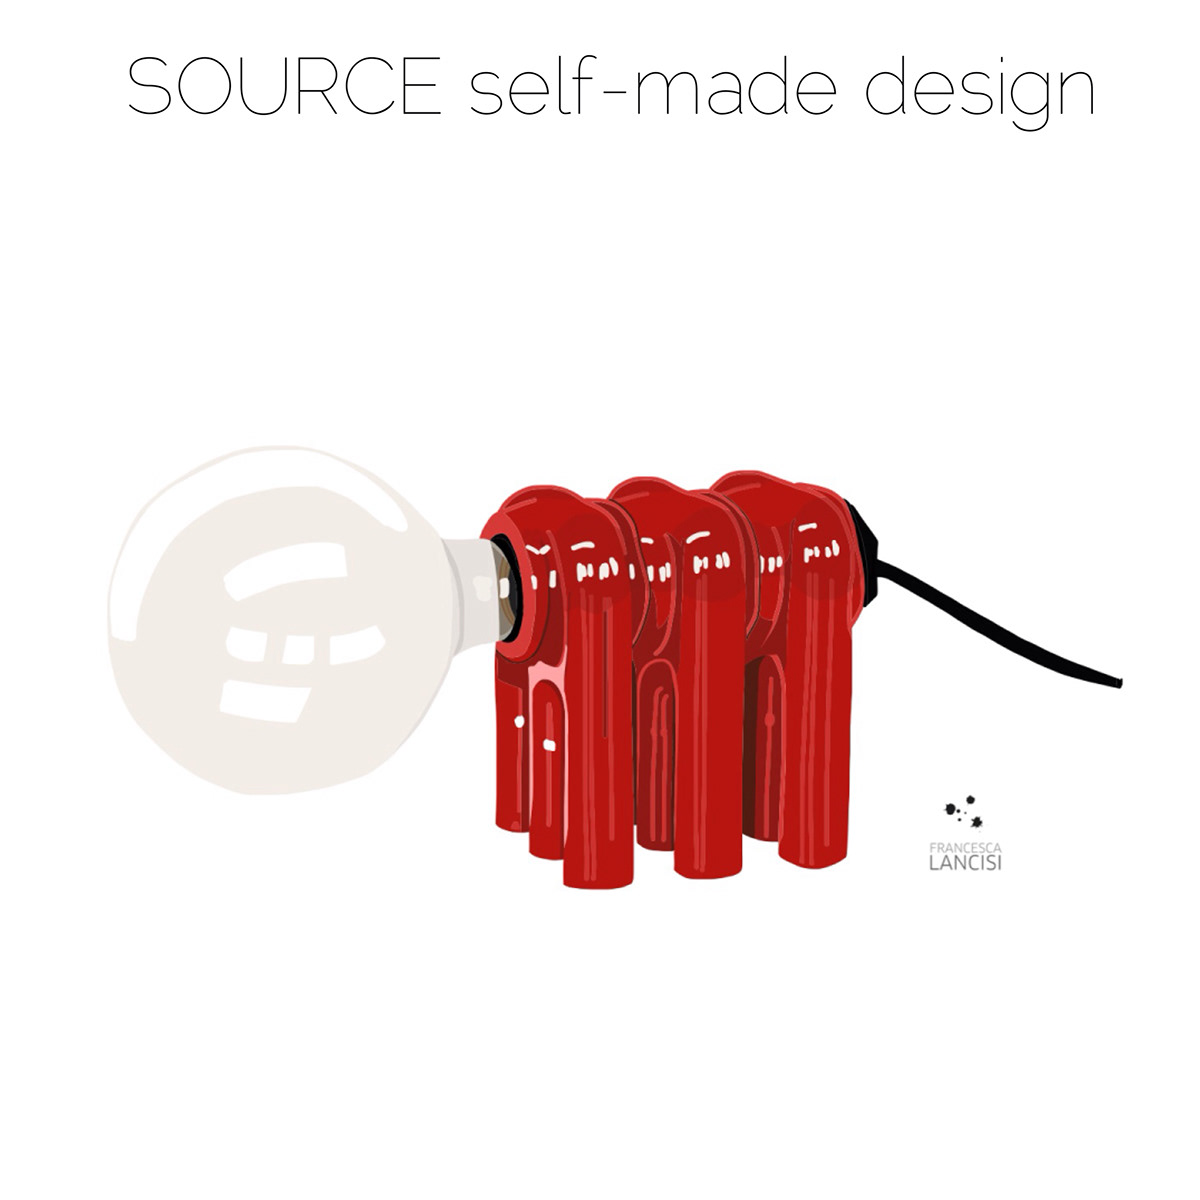 Source self made design Florence